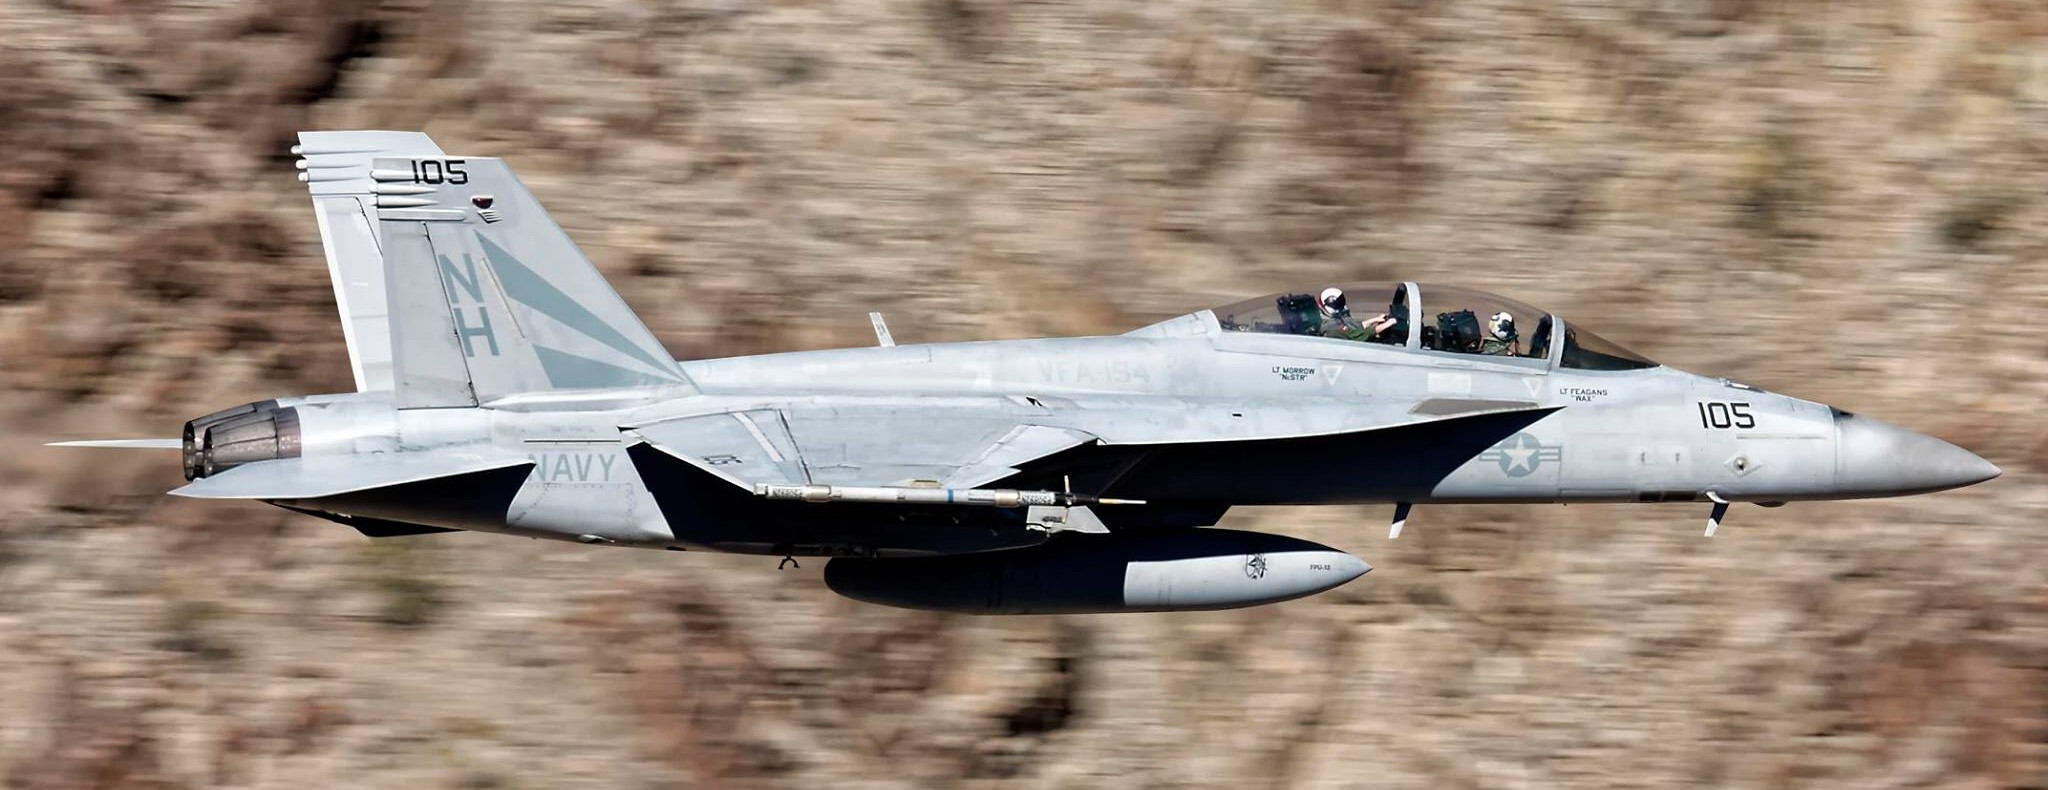 vfa-154 black knights strike fighter squadron navy f/a-18f super hornet 135